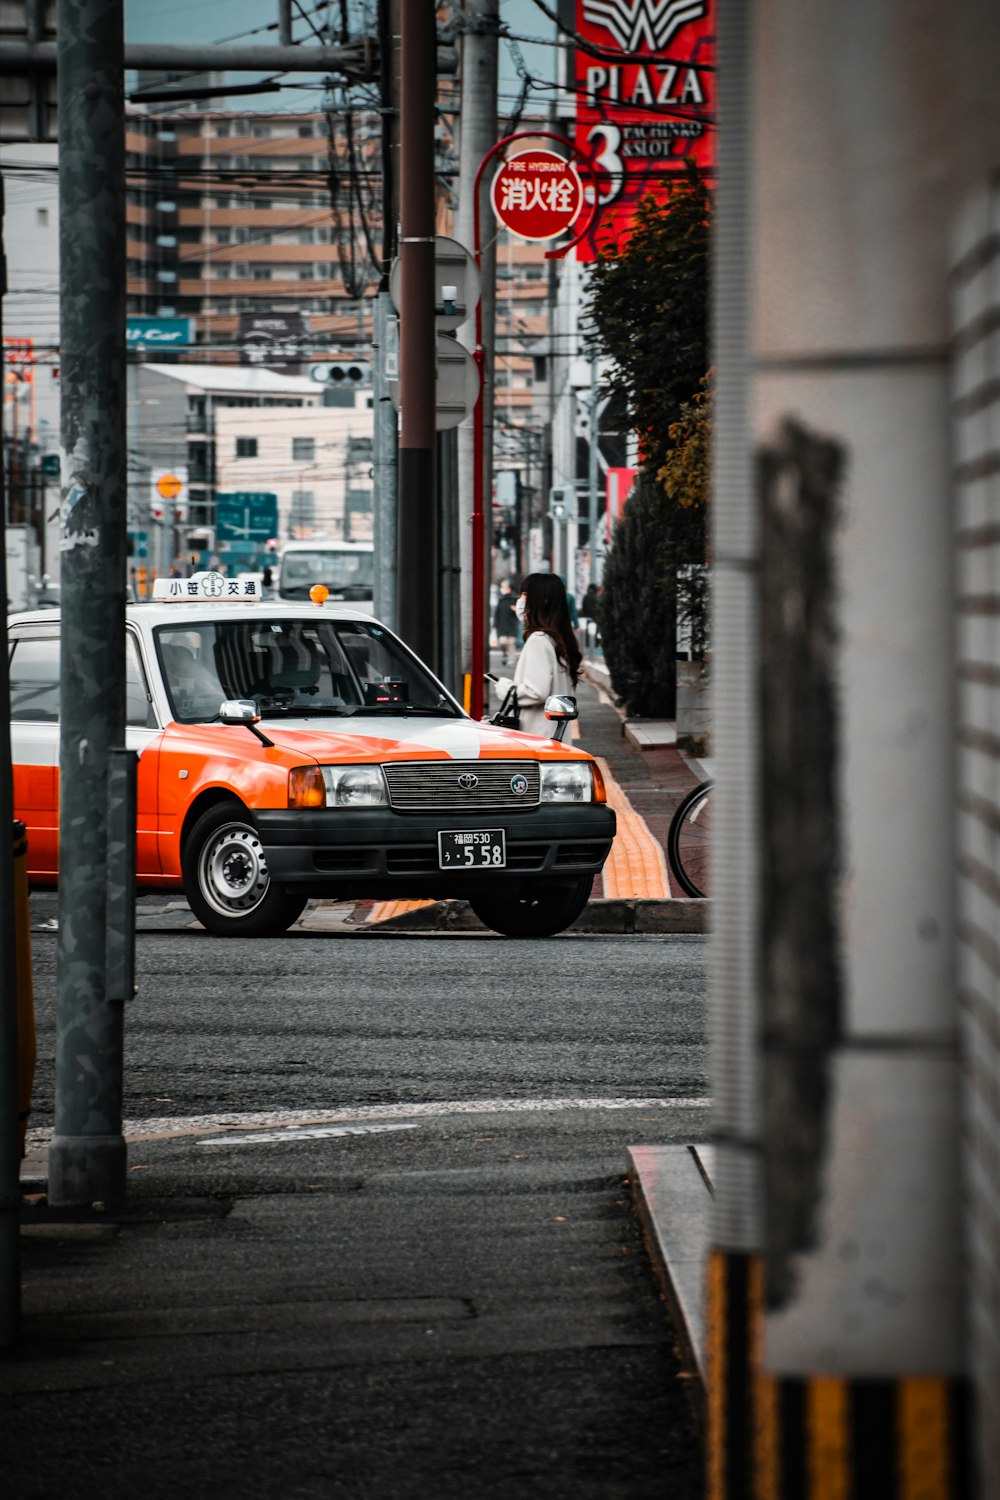 an orange and white car driving down a street